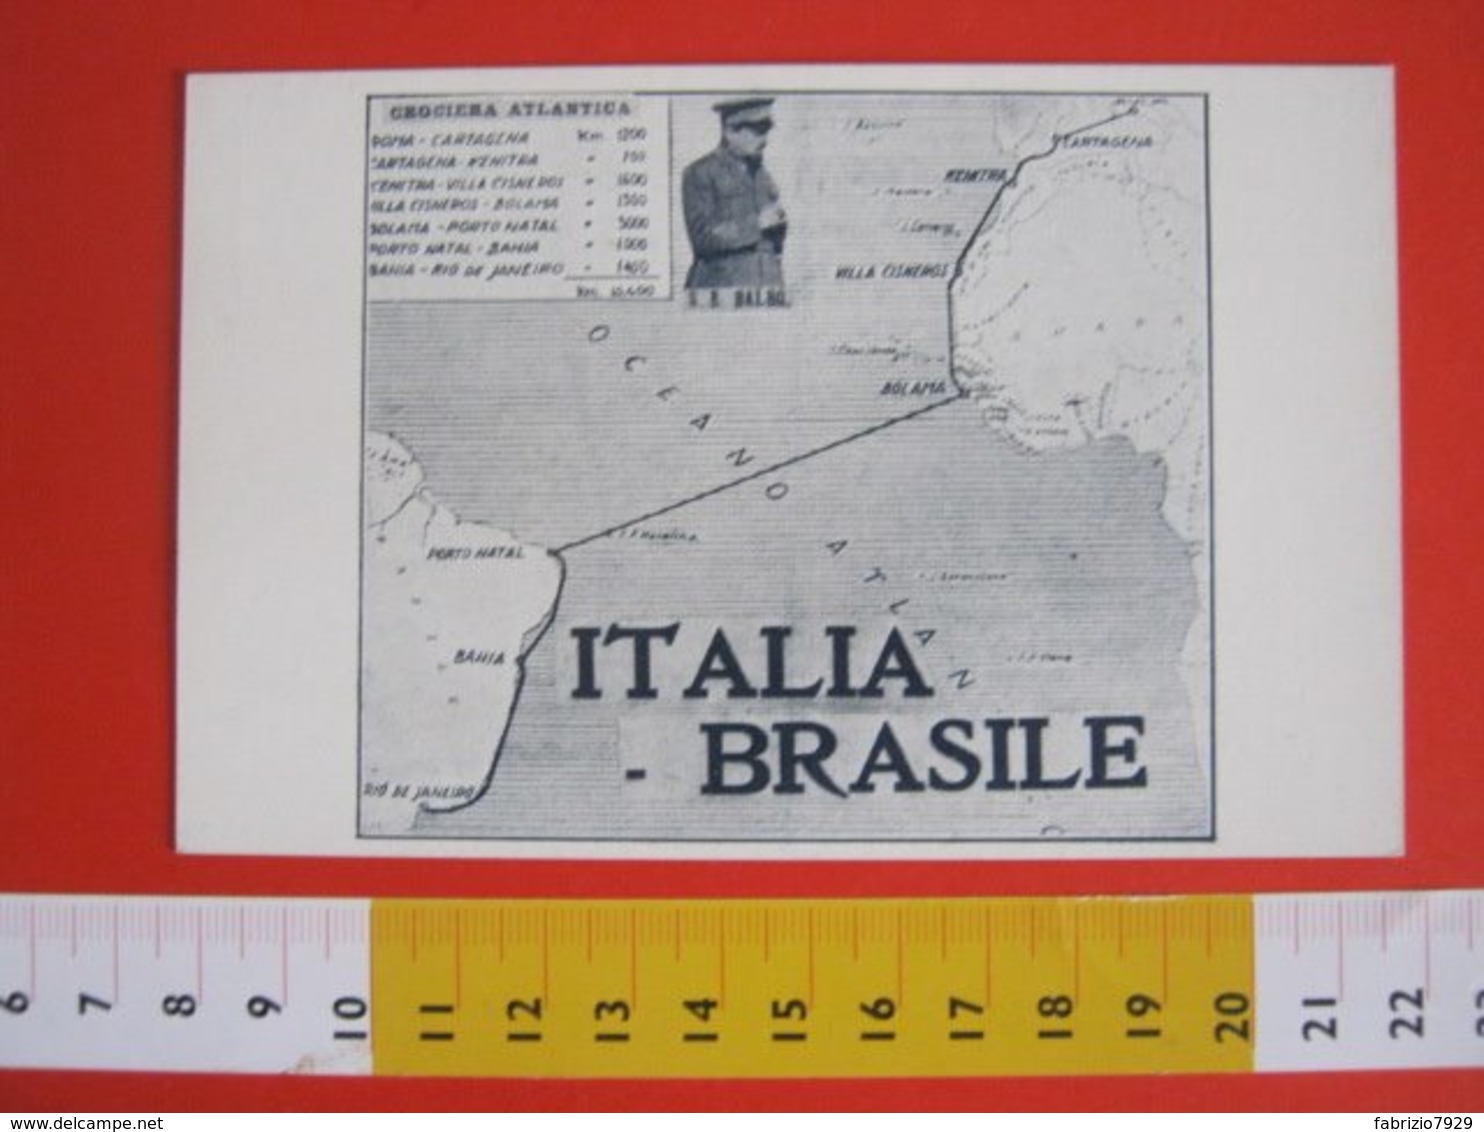 GCB ITALIA 1930 ITALO BALBO CROCIERA ATLANTICA BRASILE ROMA RIO DE JANEIRO 10400 KM MAPPA ATLANTICO AIR AVIAZIONE AEREO - Aviateurs